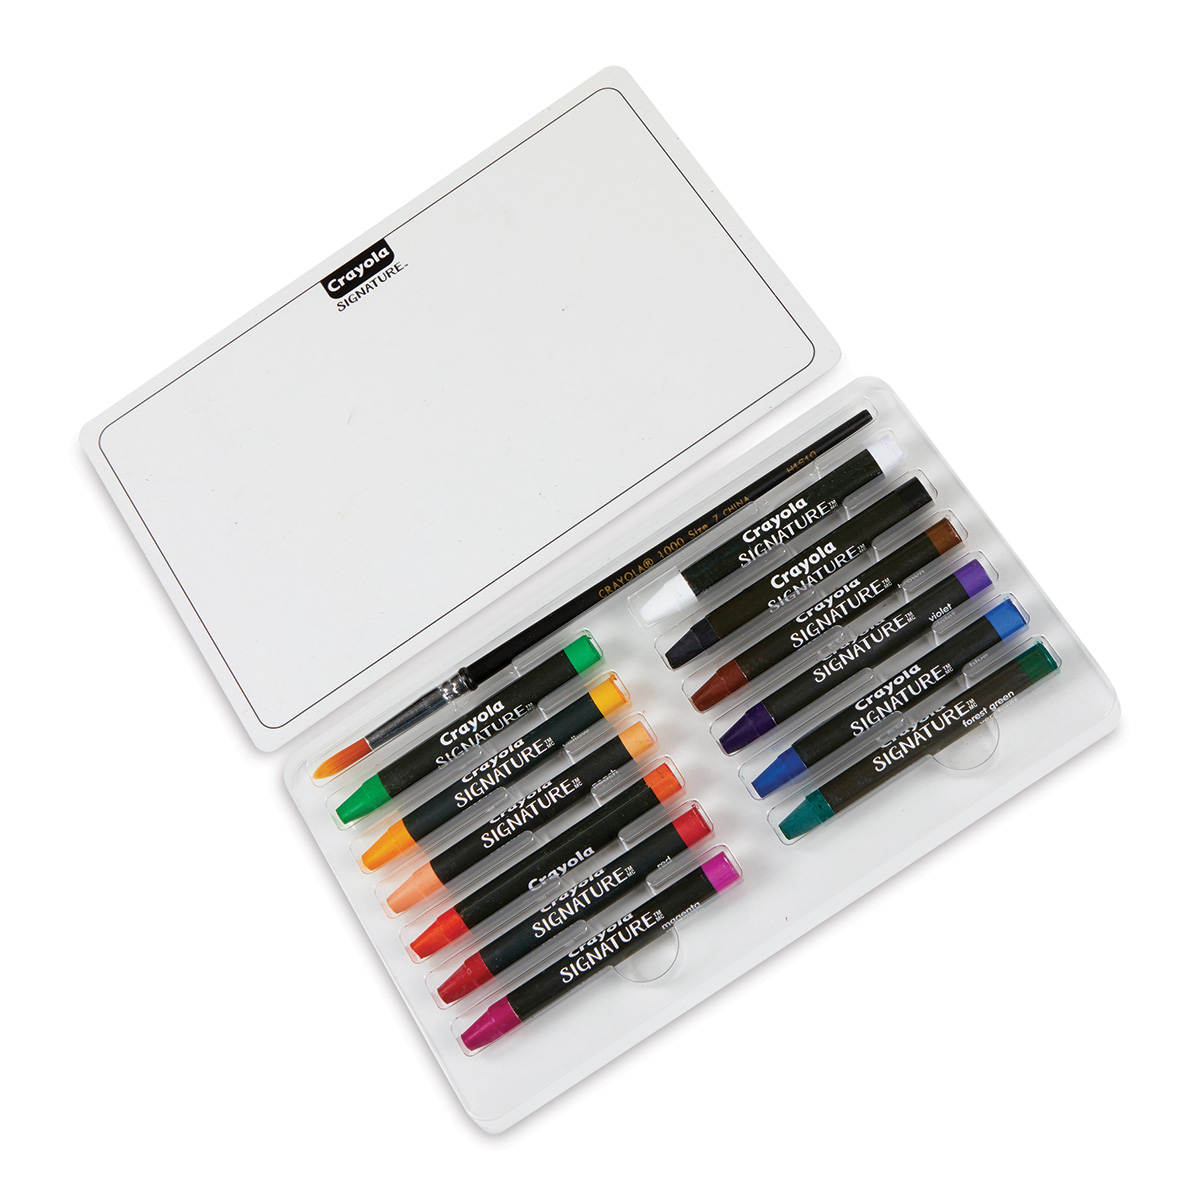 Crayola Signature Brush & Detail Dual-Tip Markers W/Tin 16/Pkg